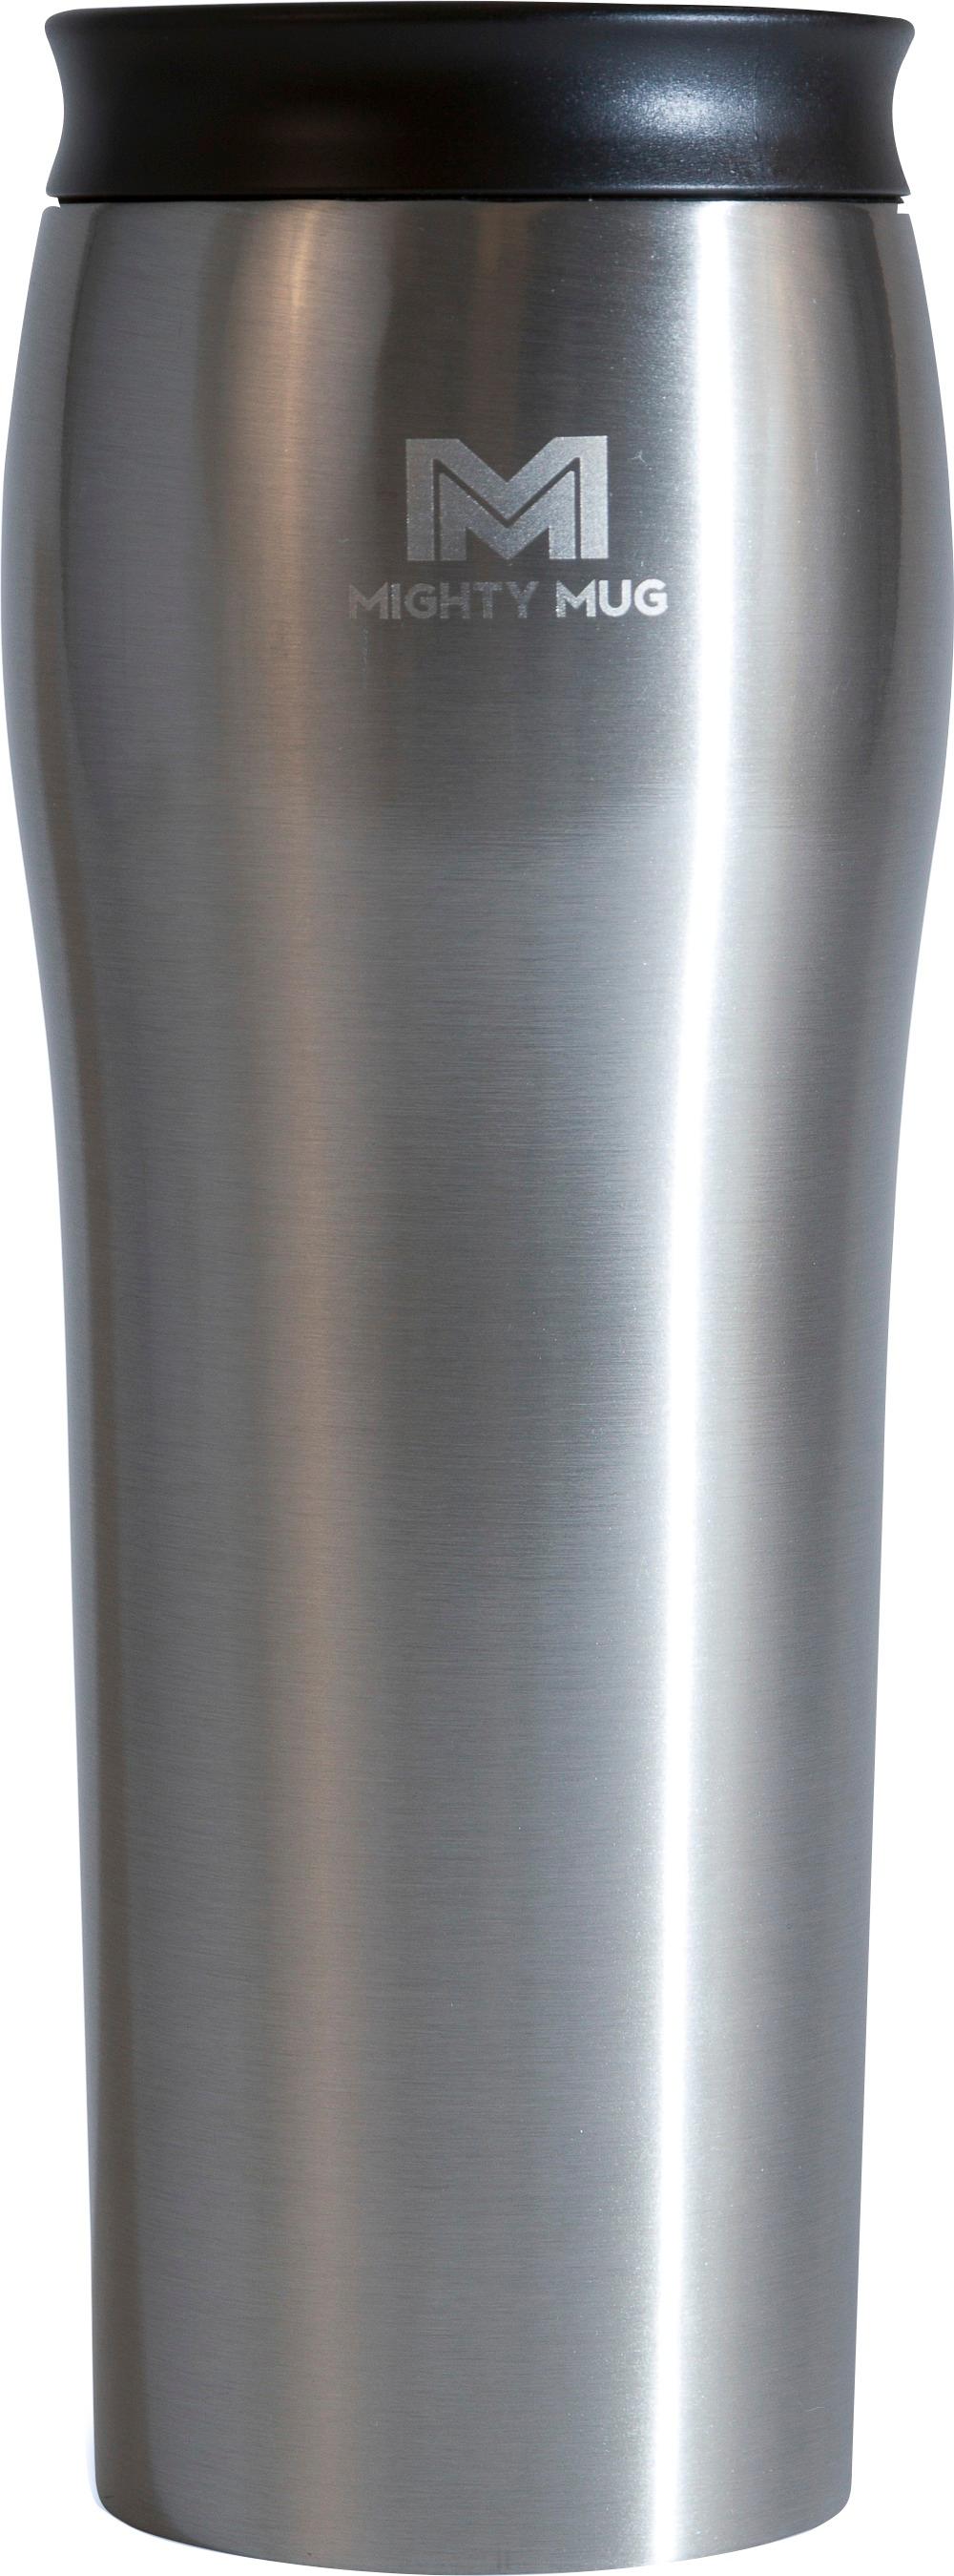 Mighty Mug Go Thermal Cup, Silver, 16.7 oz